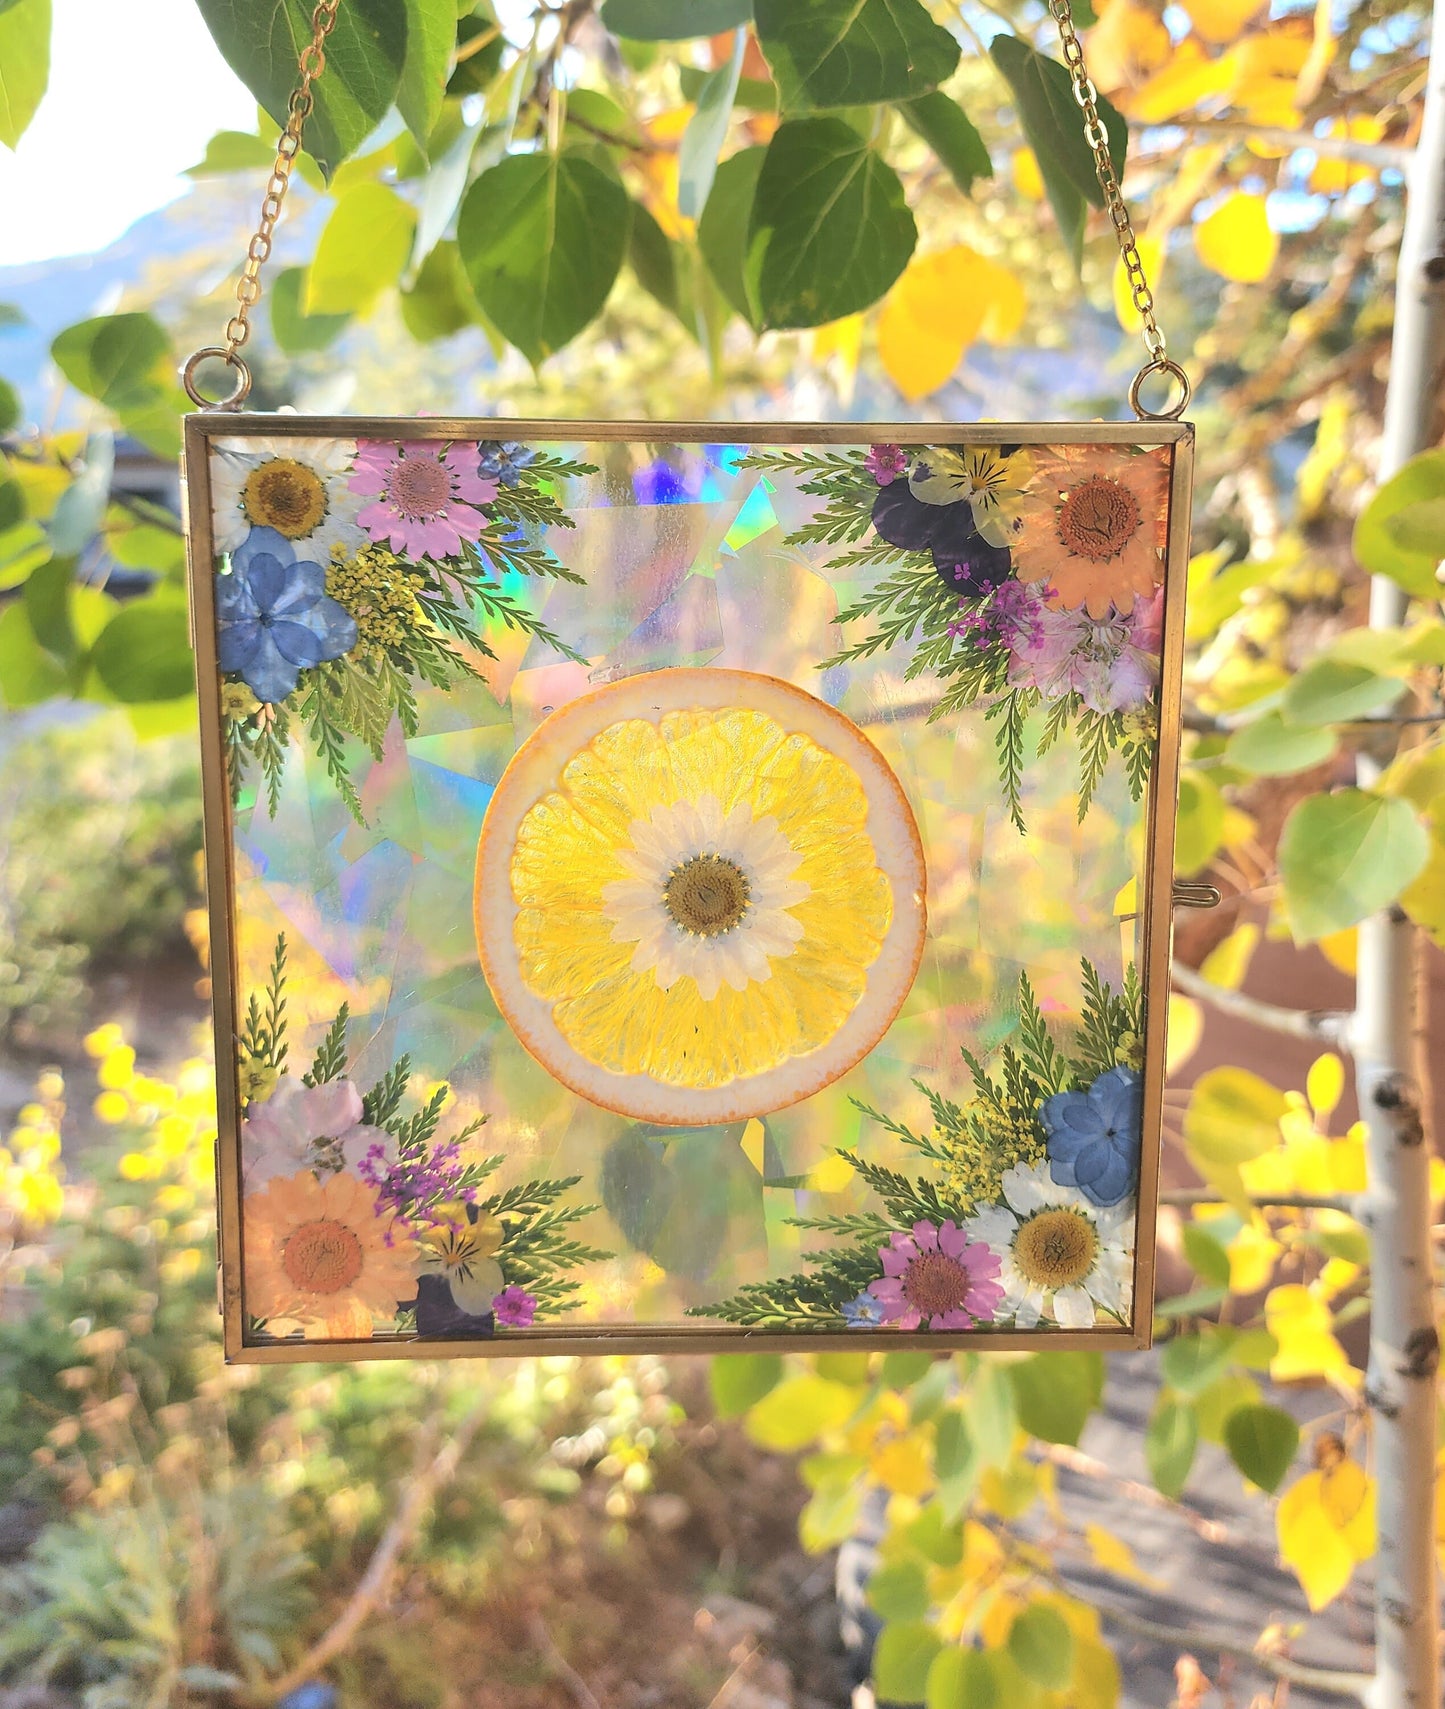 A Fruitful Tapestry - Fractal Floral Suncatcher